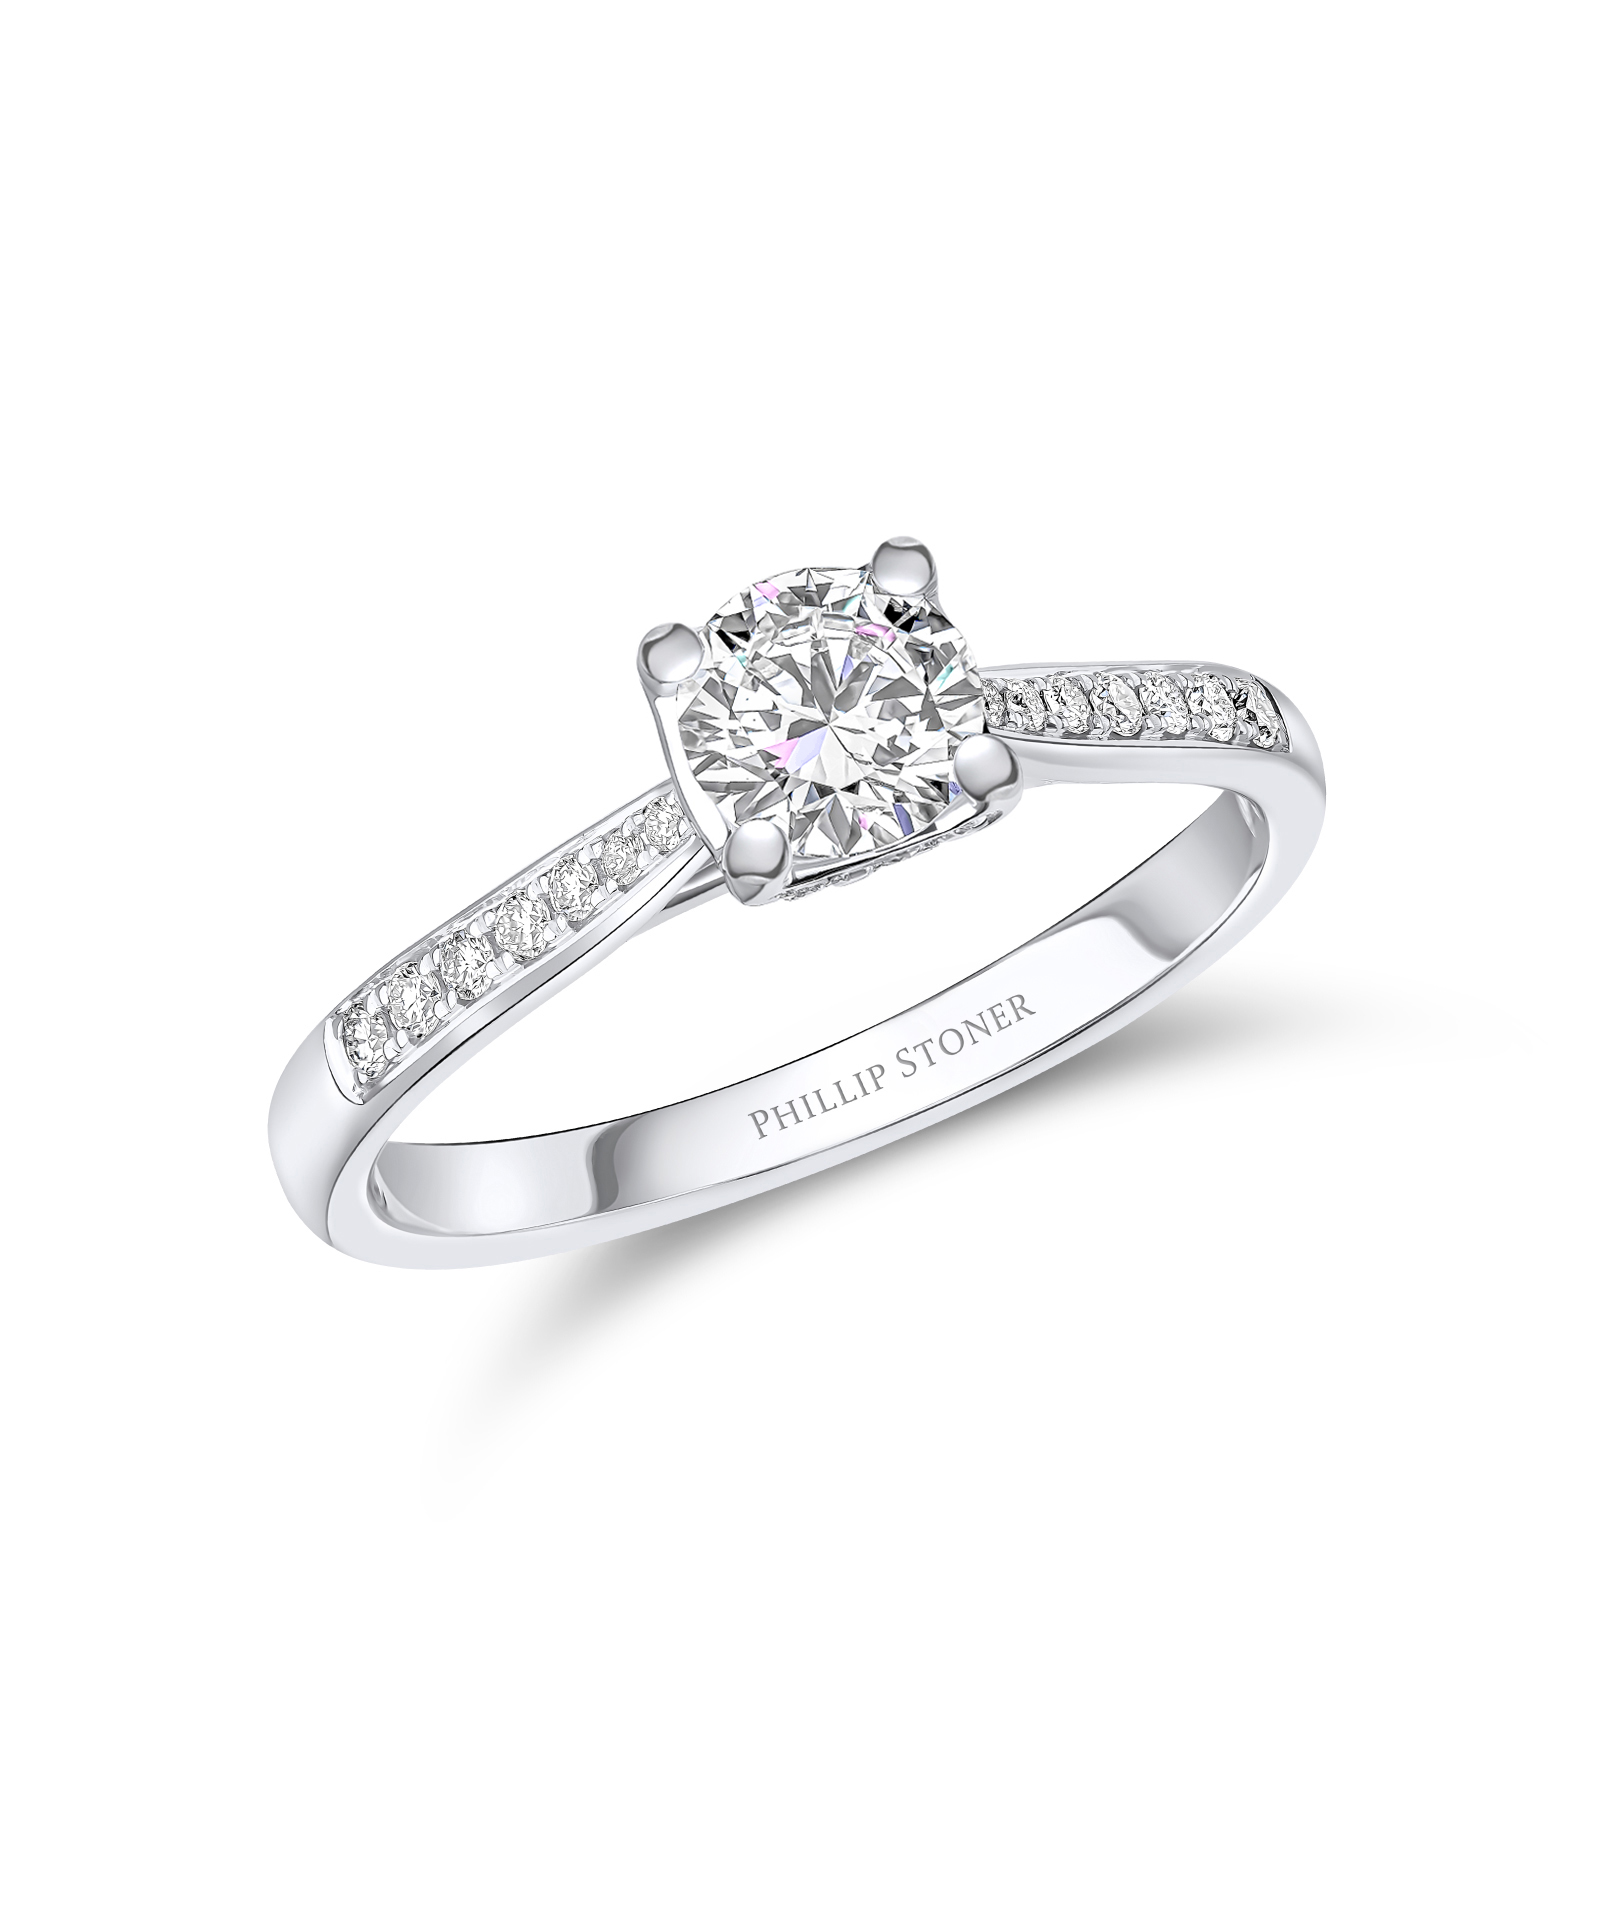 0.70ct Round Brilliant Diamond Engagement Ring with Pavé Set Shoulders - Phillip Stoner The Jeweller